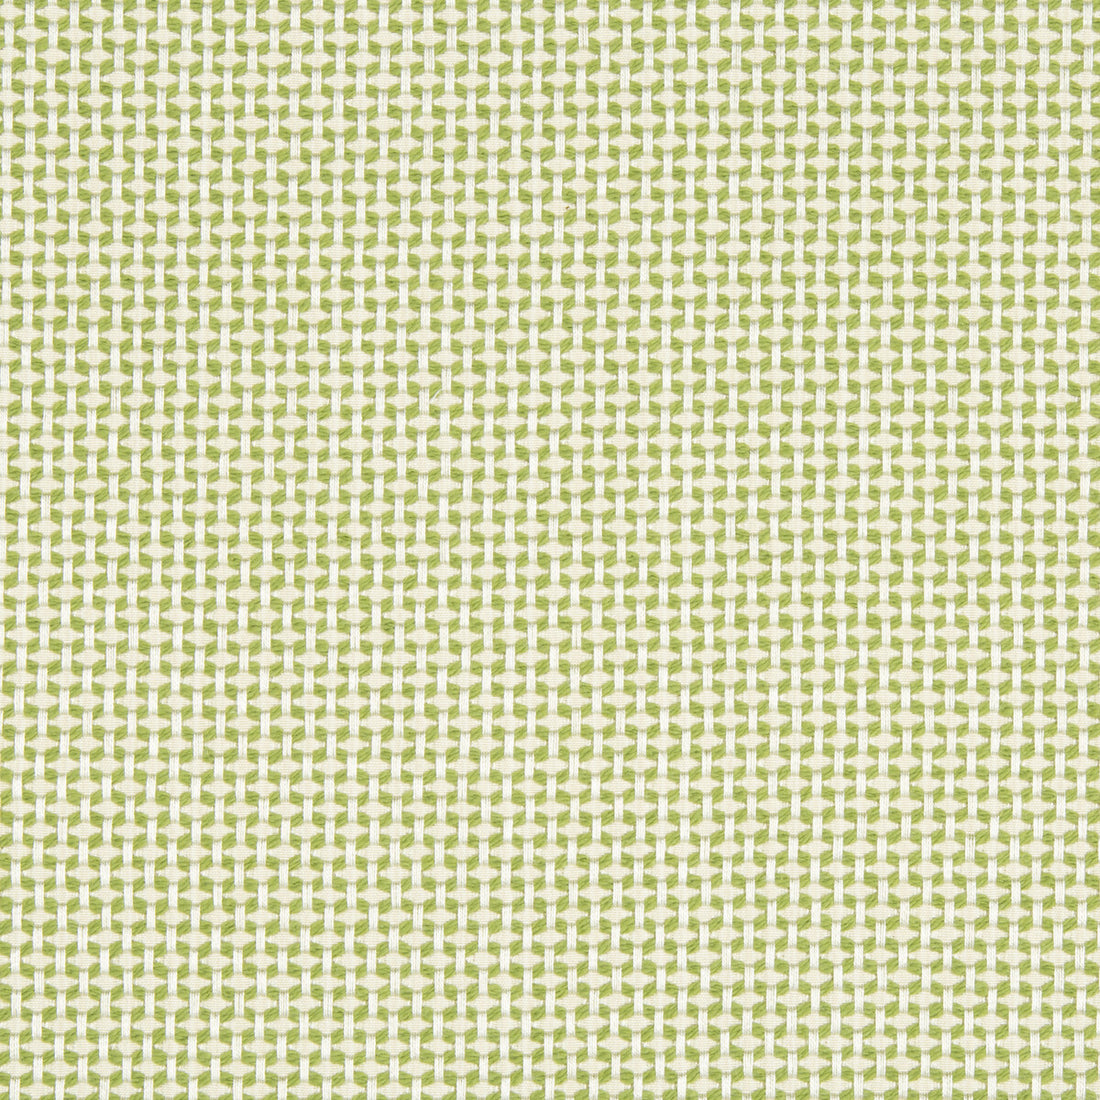 Kravet Design fabric in 34716-316 color - pattern 34716.316.0 - by Kravet Design in the Gis collection